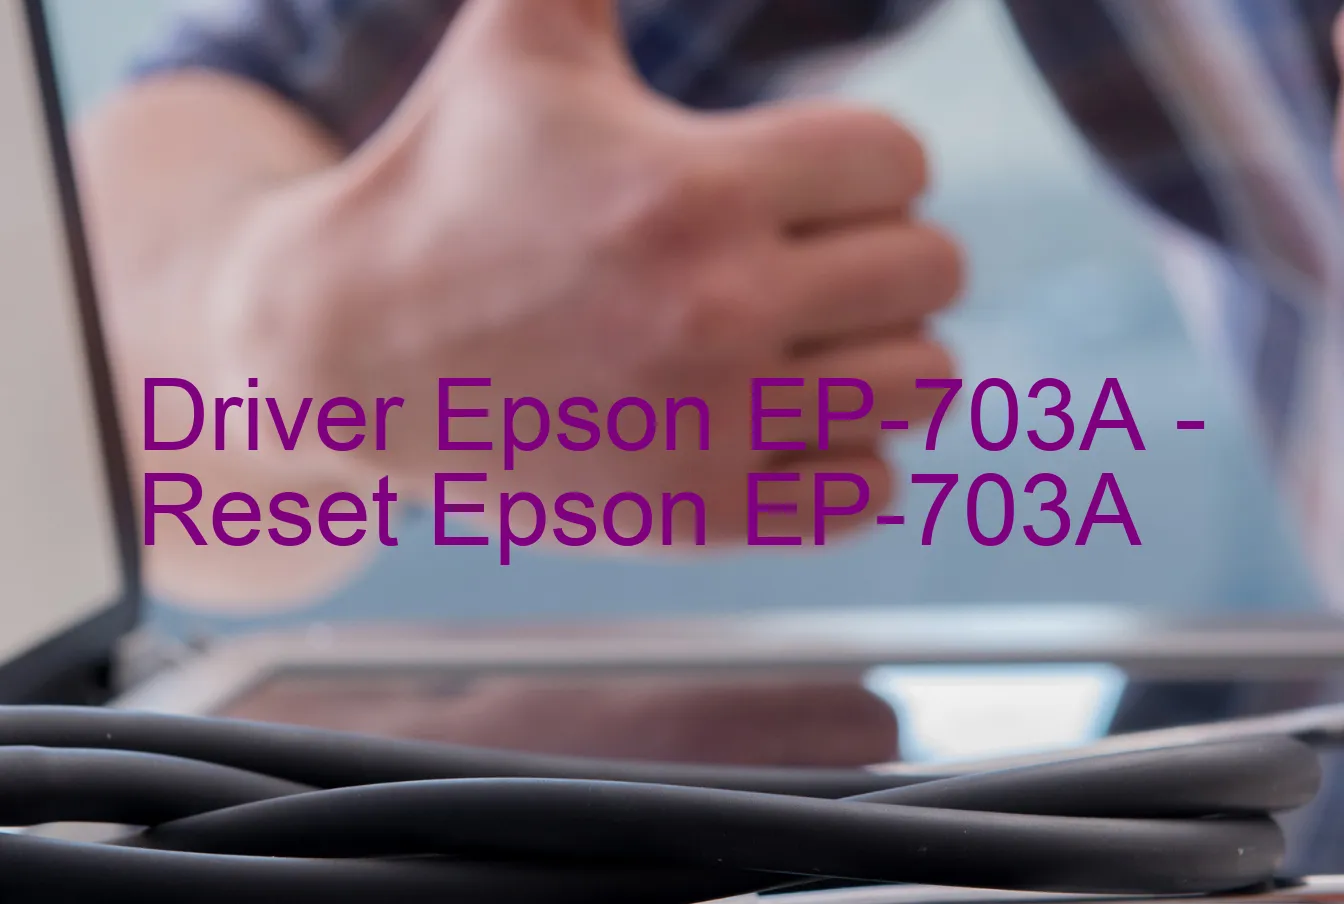 Epson EP-703Aのドライバー、Epson EP-703Aのリセットソフトウェア